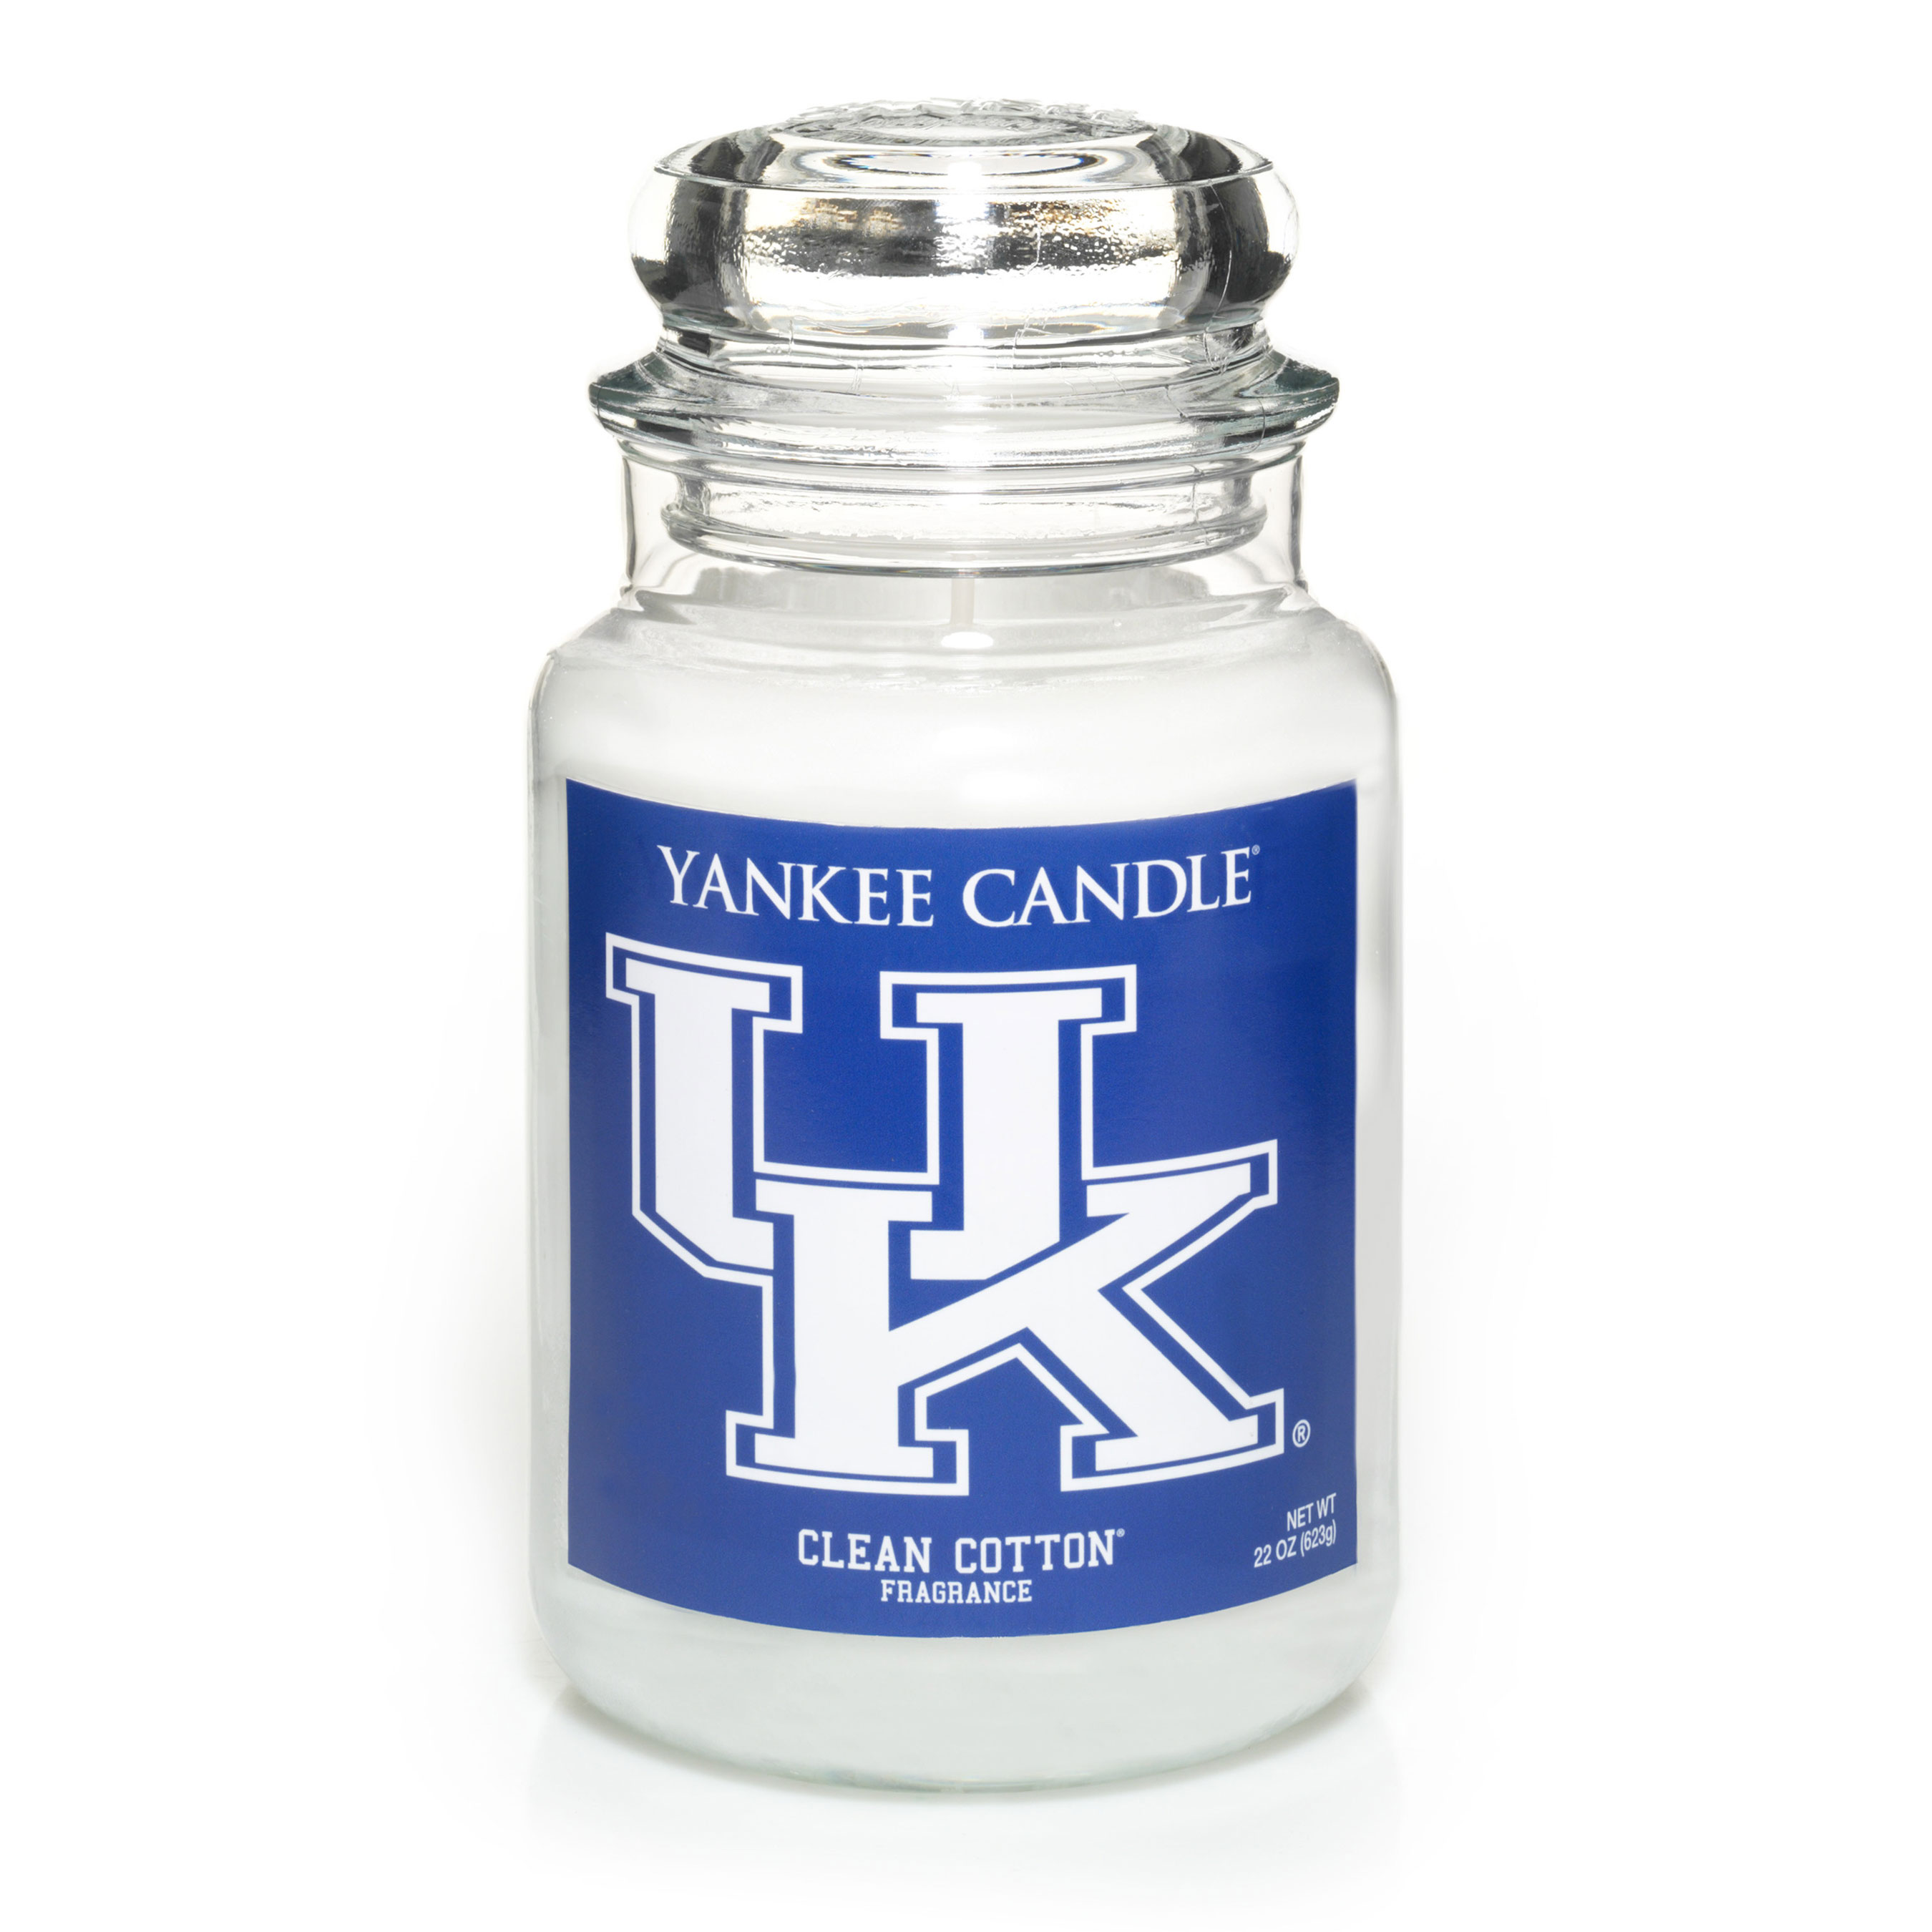 http://www.multivu.com/assets/61720/photos/61720-University-of-Kentucky-Yankee-Candle-Large-Jar-original.jpg?1376096459